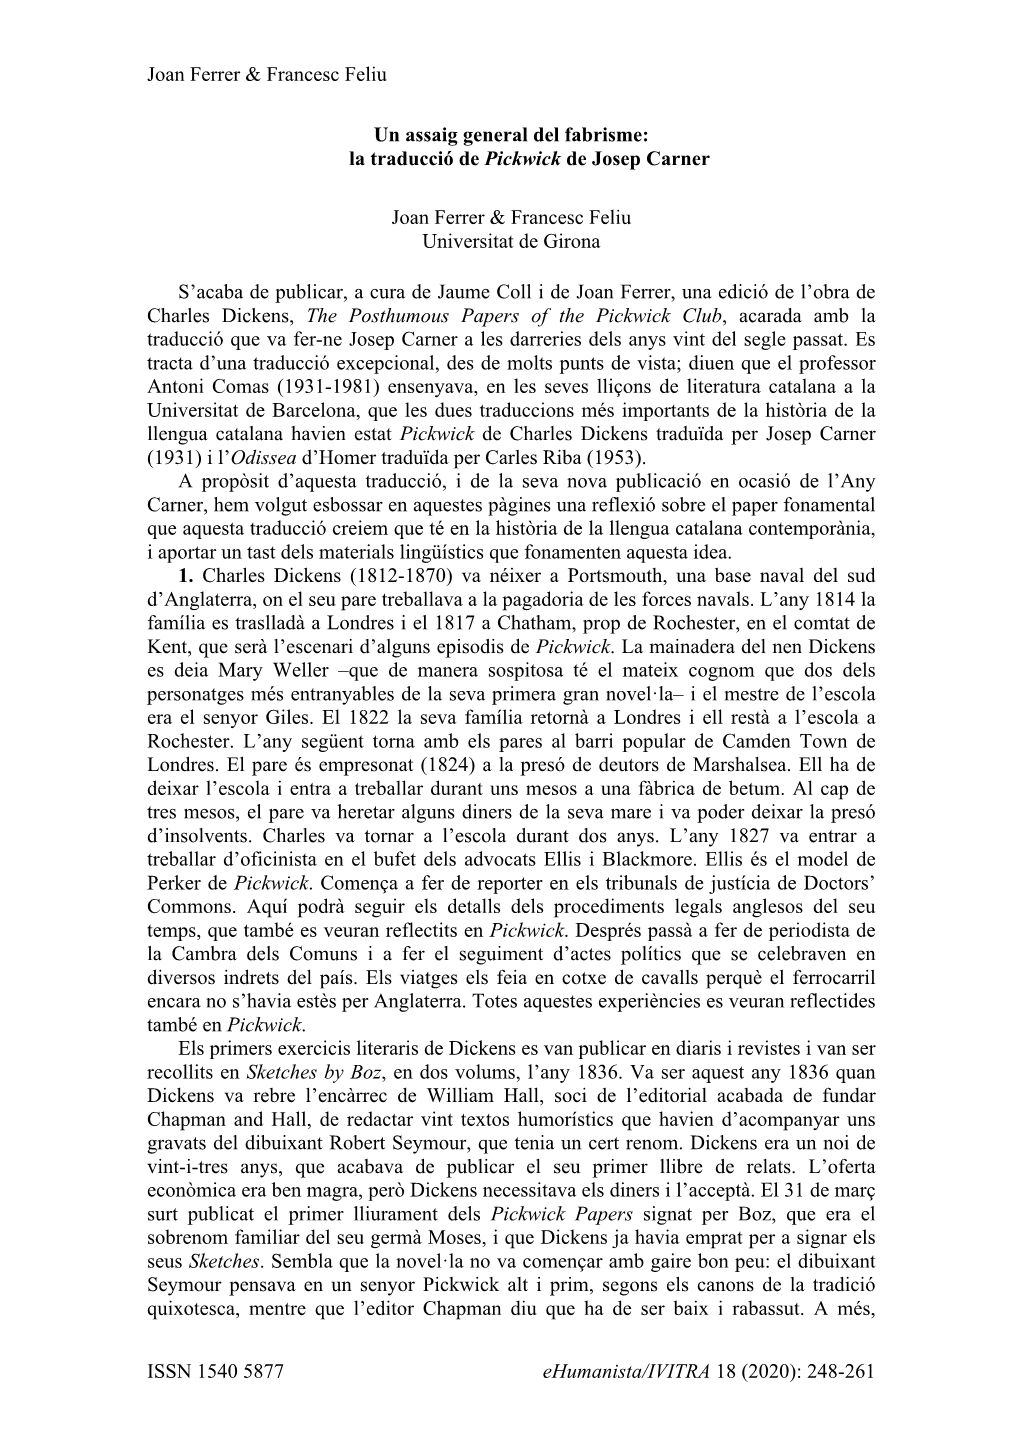 Joan Ferrer & Francesc Feliu ISSN 1540 5877 Ehumanista/IVITRA 18